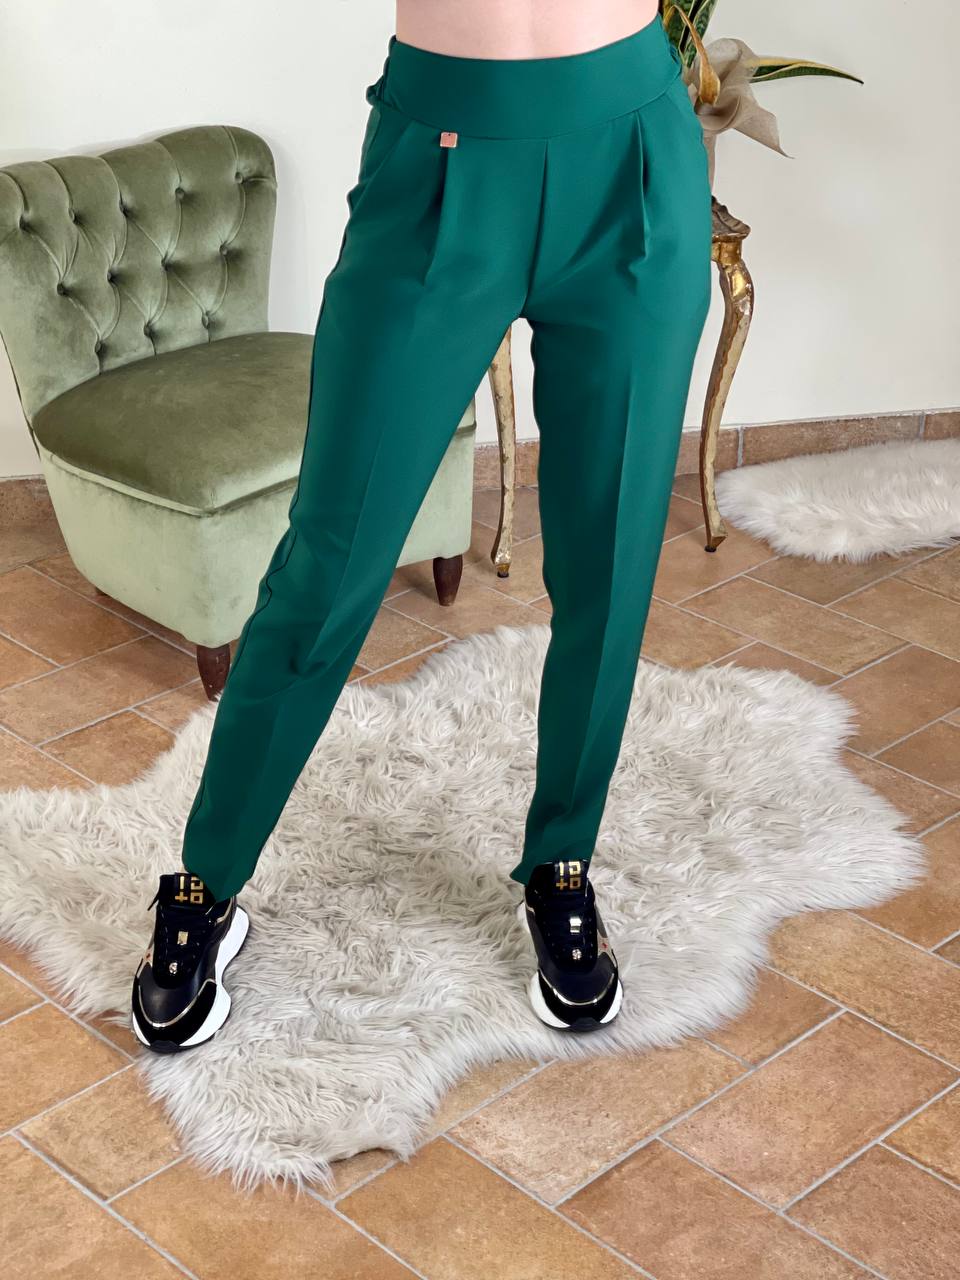 D'ELLE pantalone pences (disponibile verde bosco e nero)